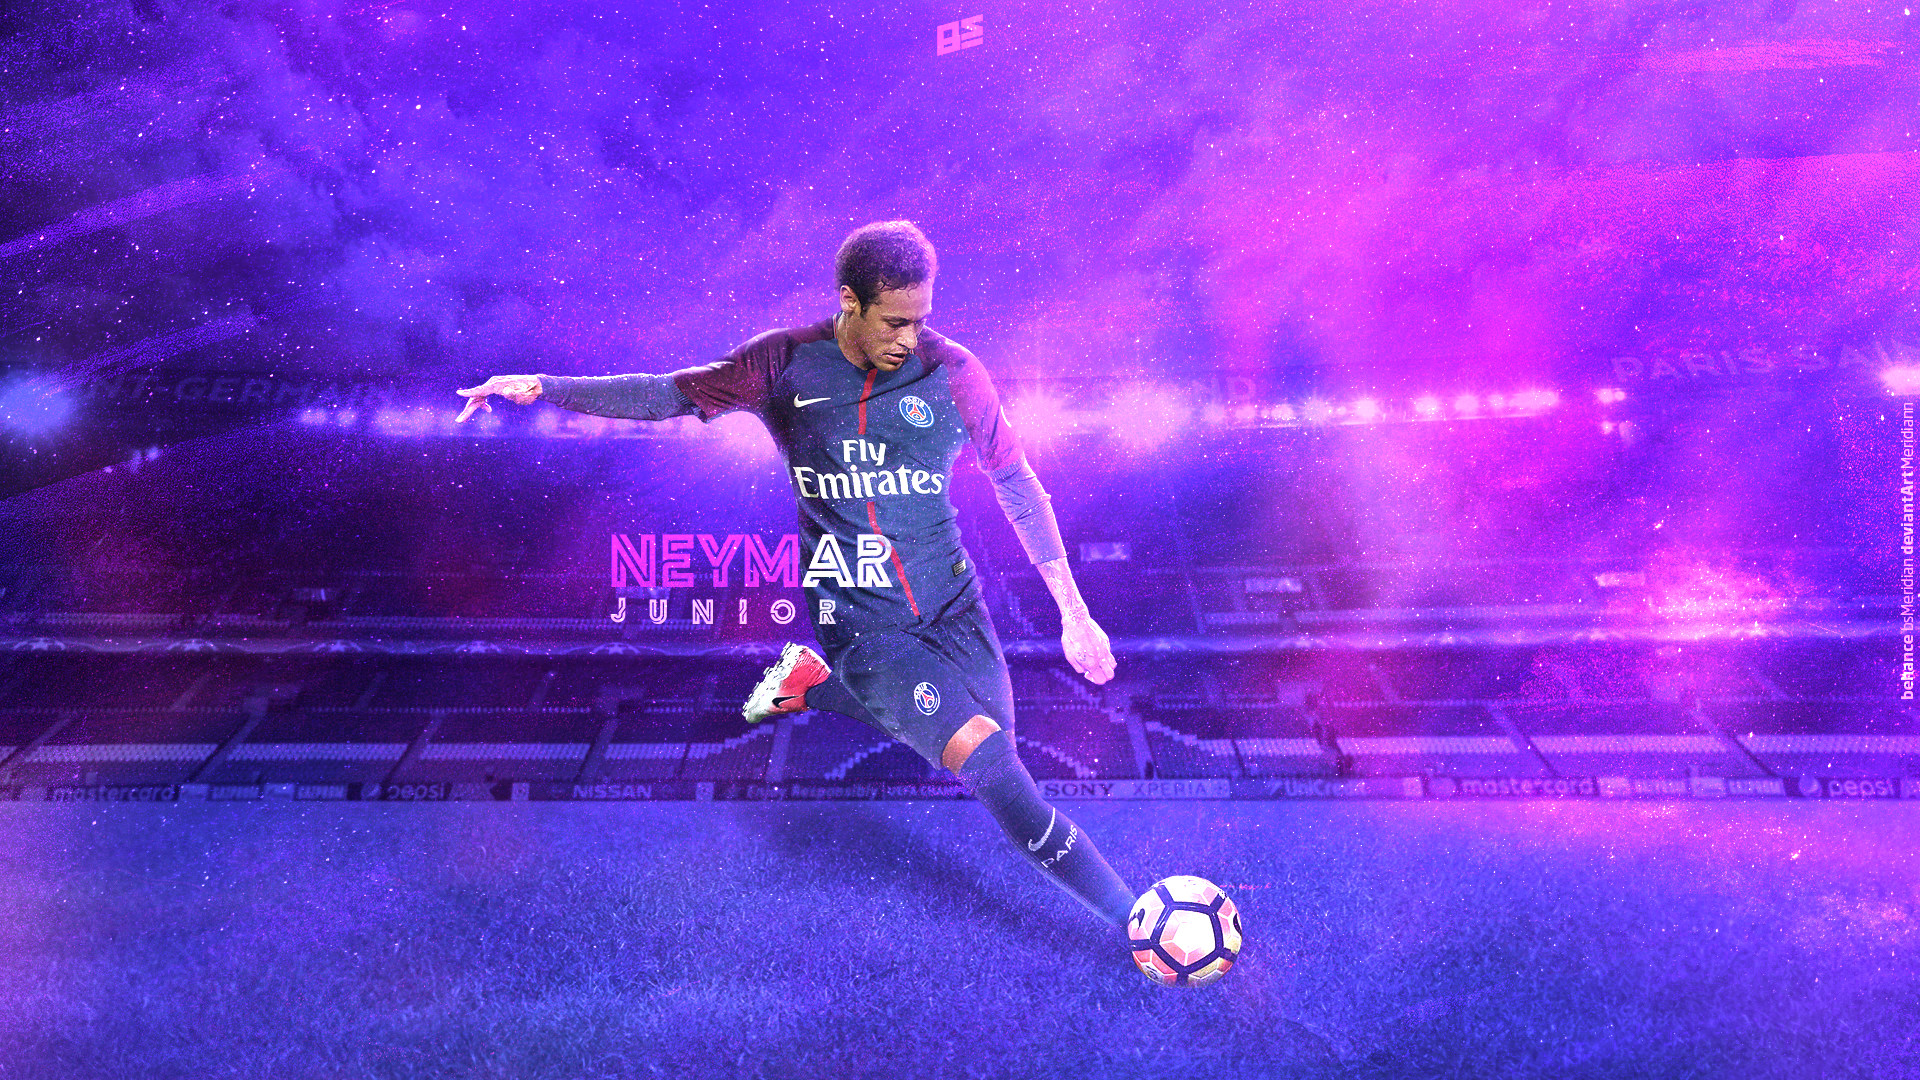 1920x1080 Neymar Paris Saint-Germain P.S.G. soccer